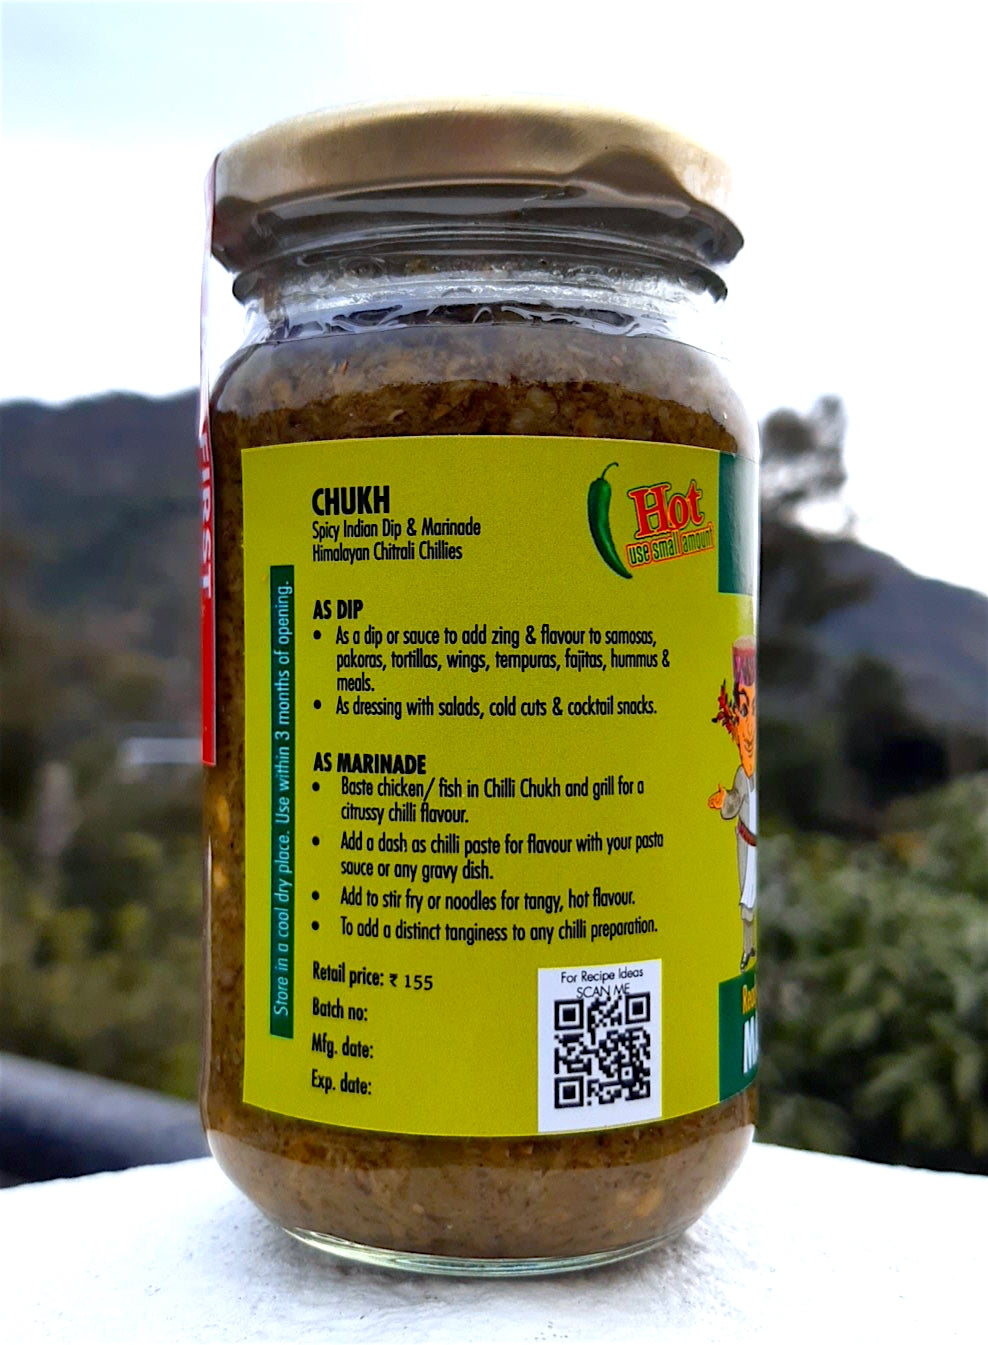 Himachilli Chukh- Fresh Green Chilli with Citrus Paste (200 gms)